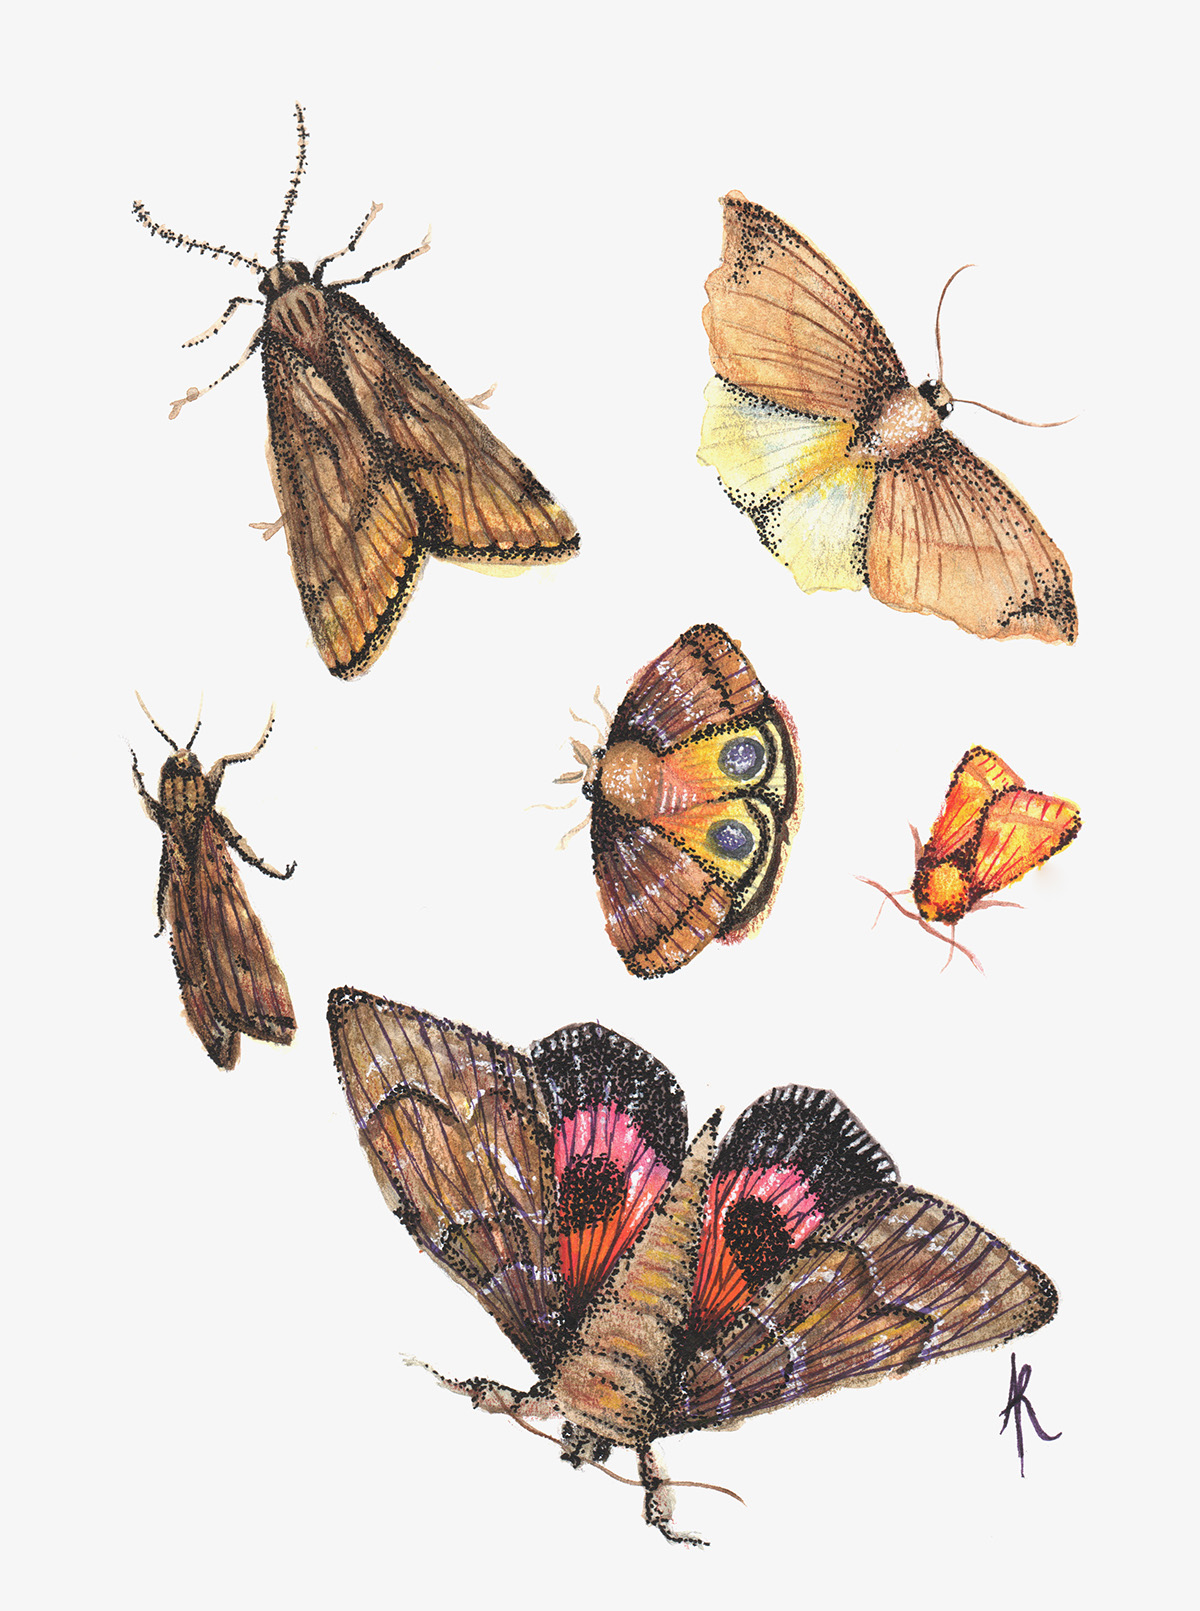 scientific illustration biology cicada moth Grasshopper beetles Flies mosquito watercolor colored pencils ink Derwent cotman commission